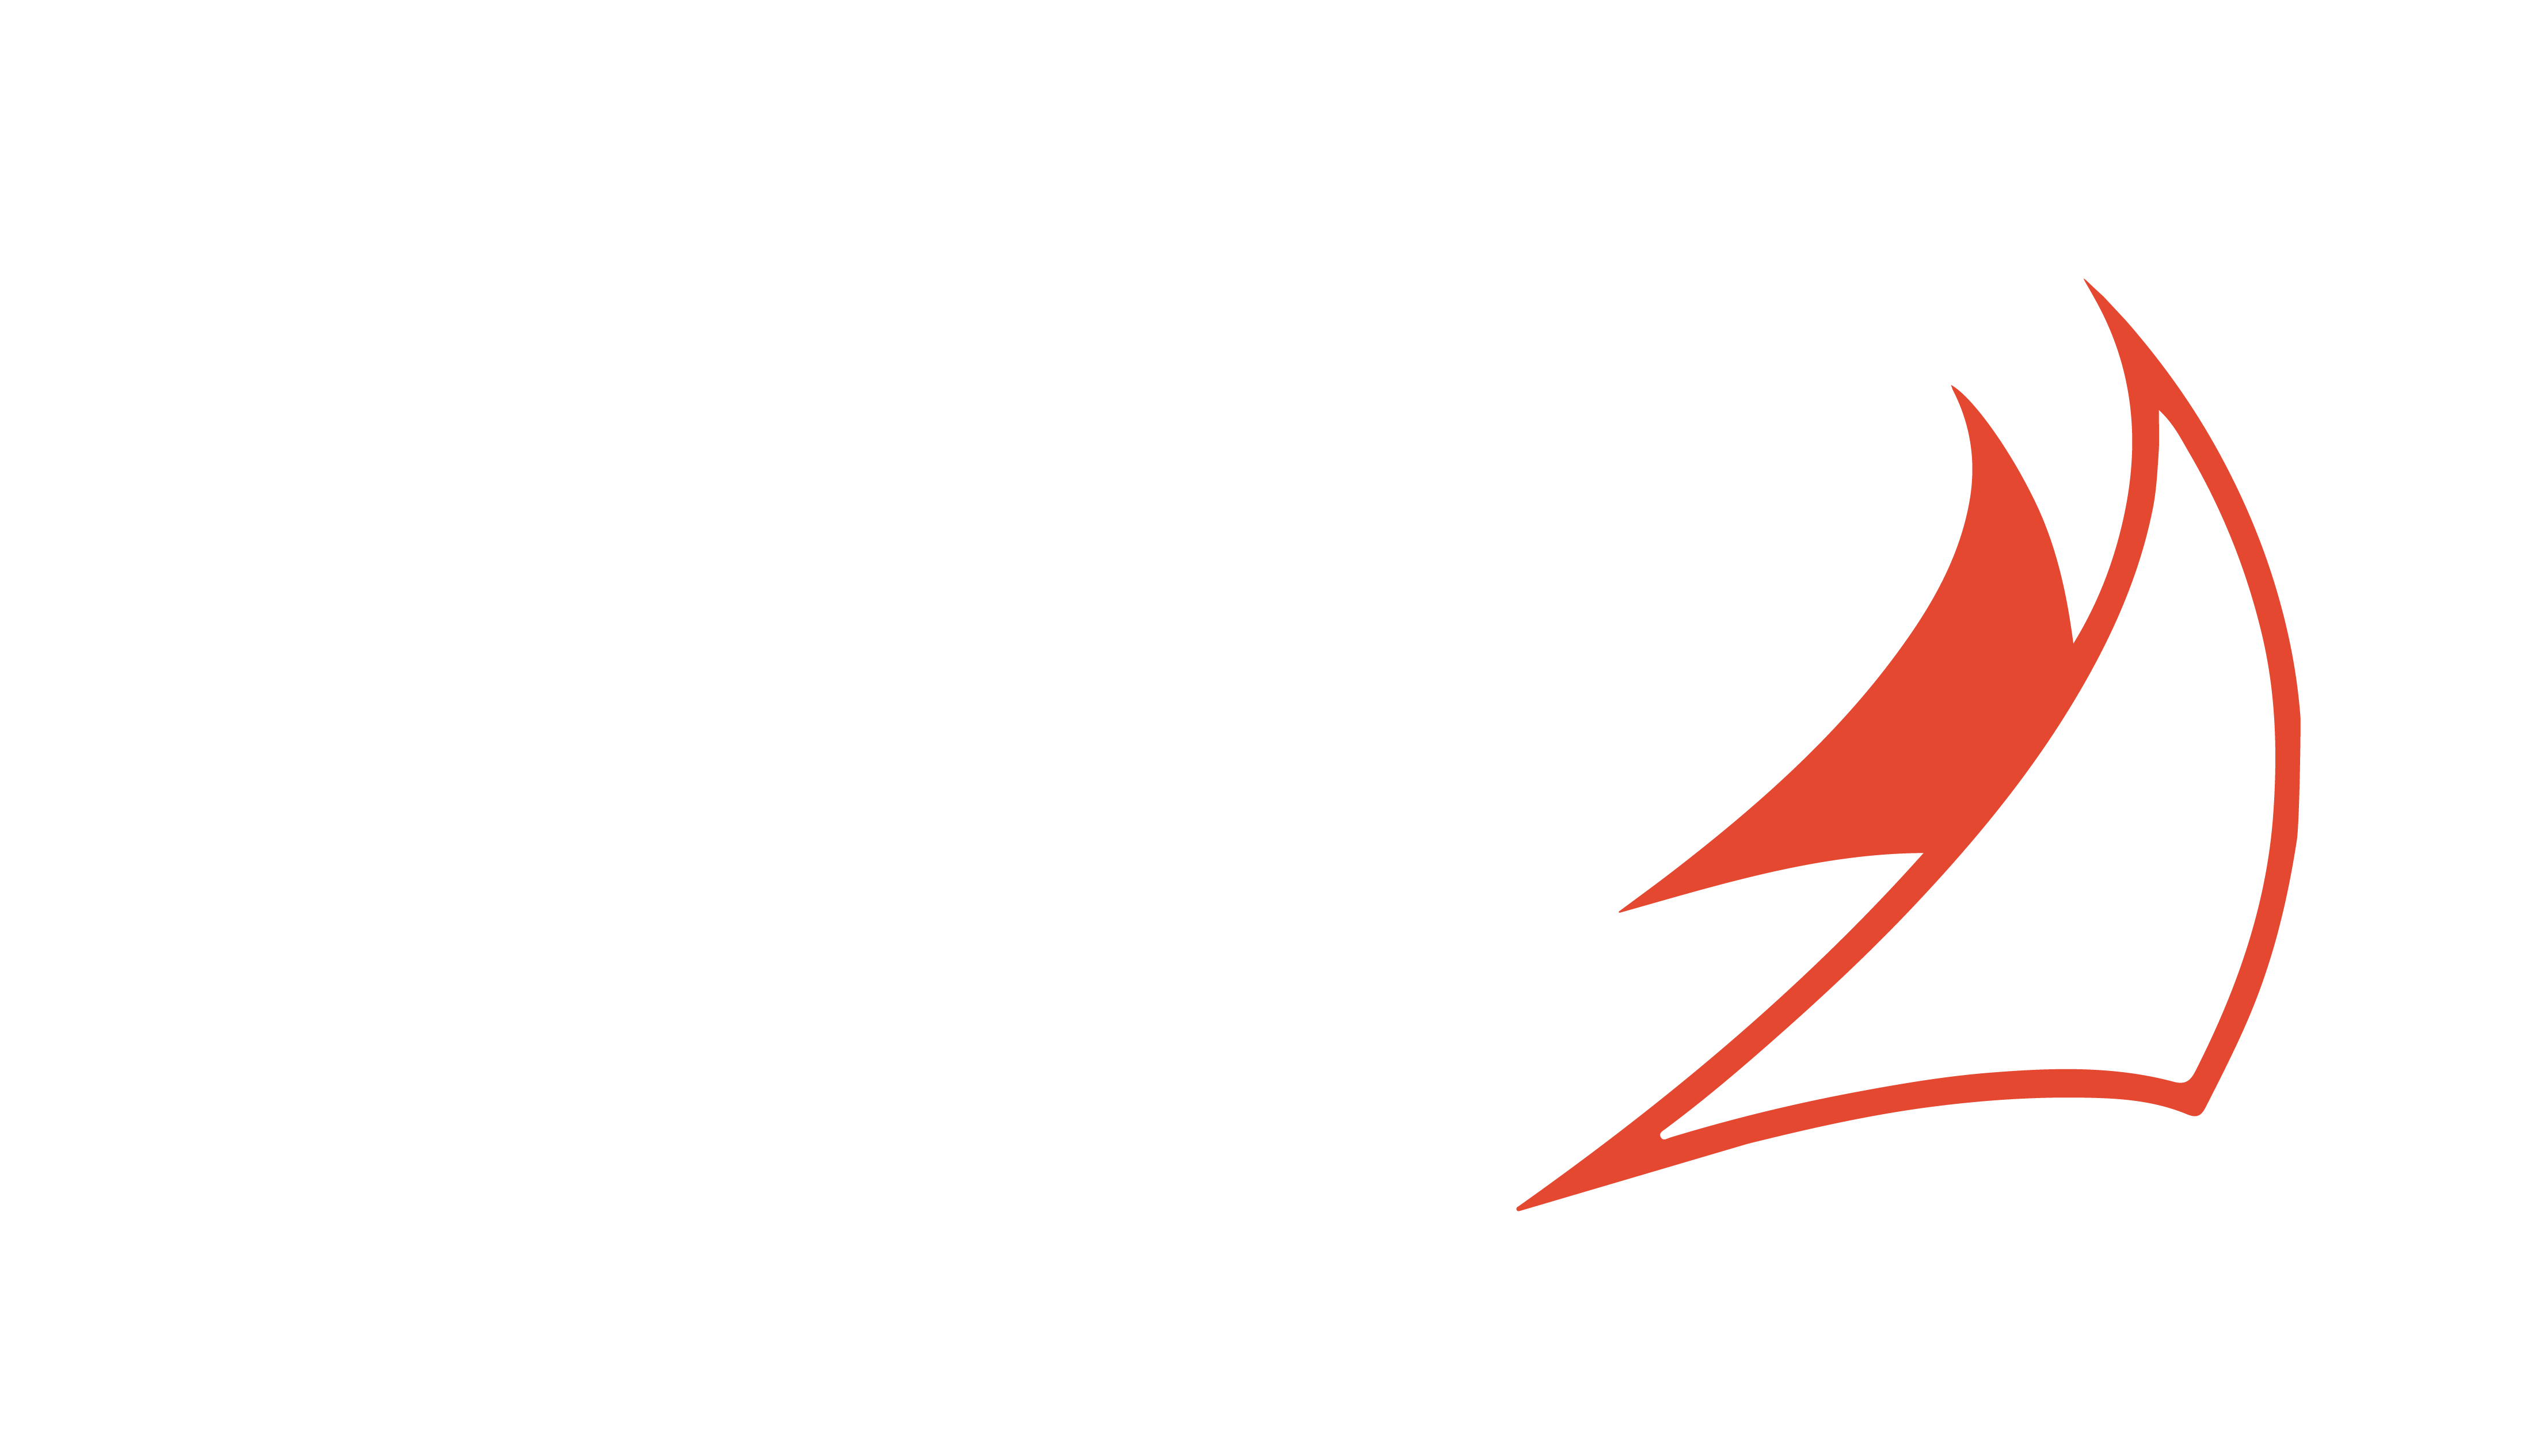 Amaris group